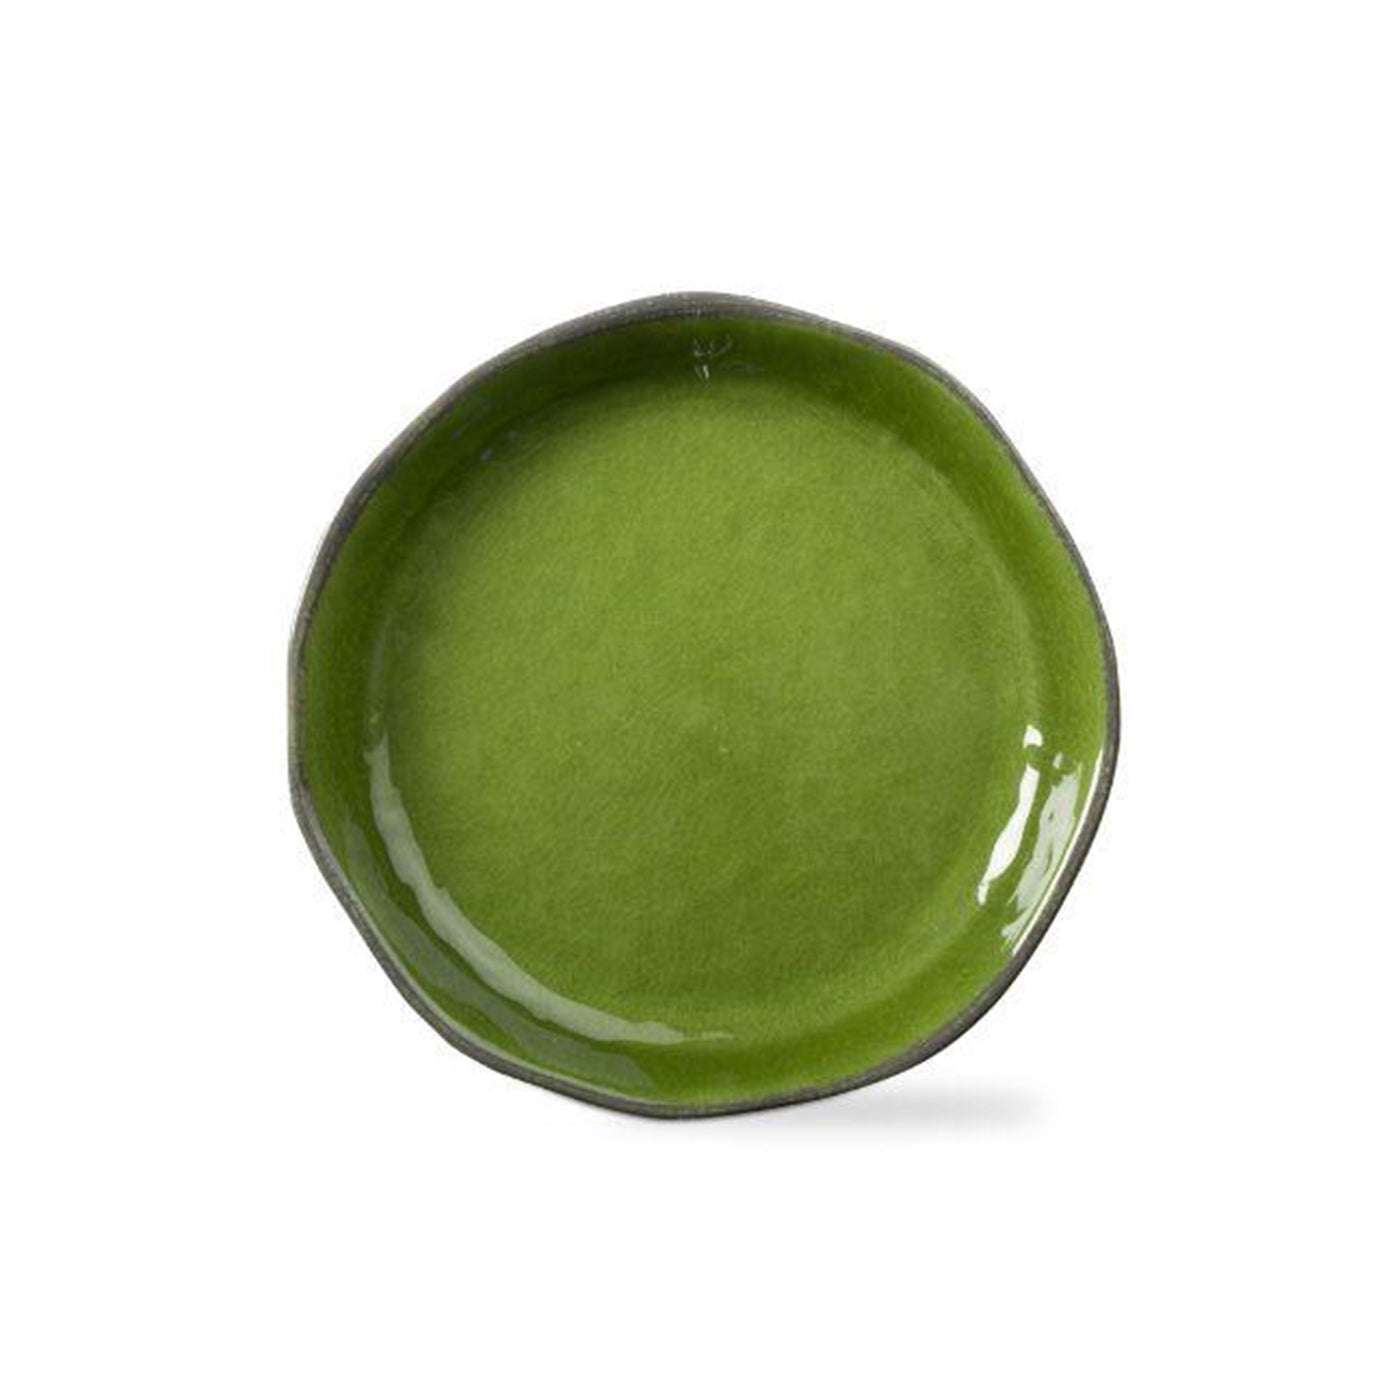 Veranda Large Shallow Melamine Bowl - Green